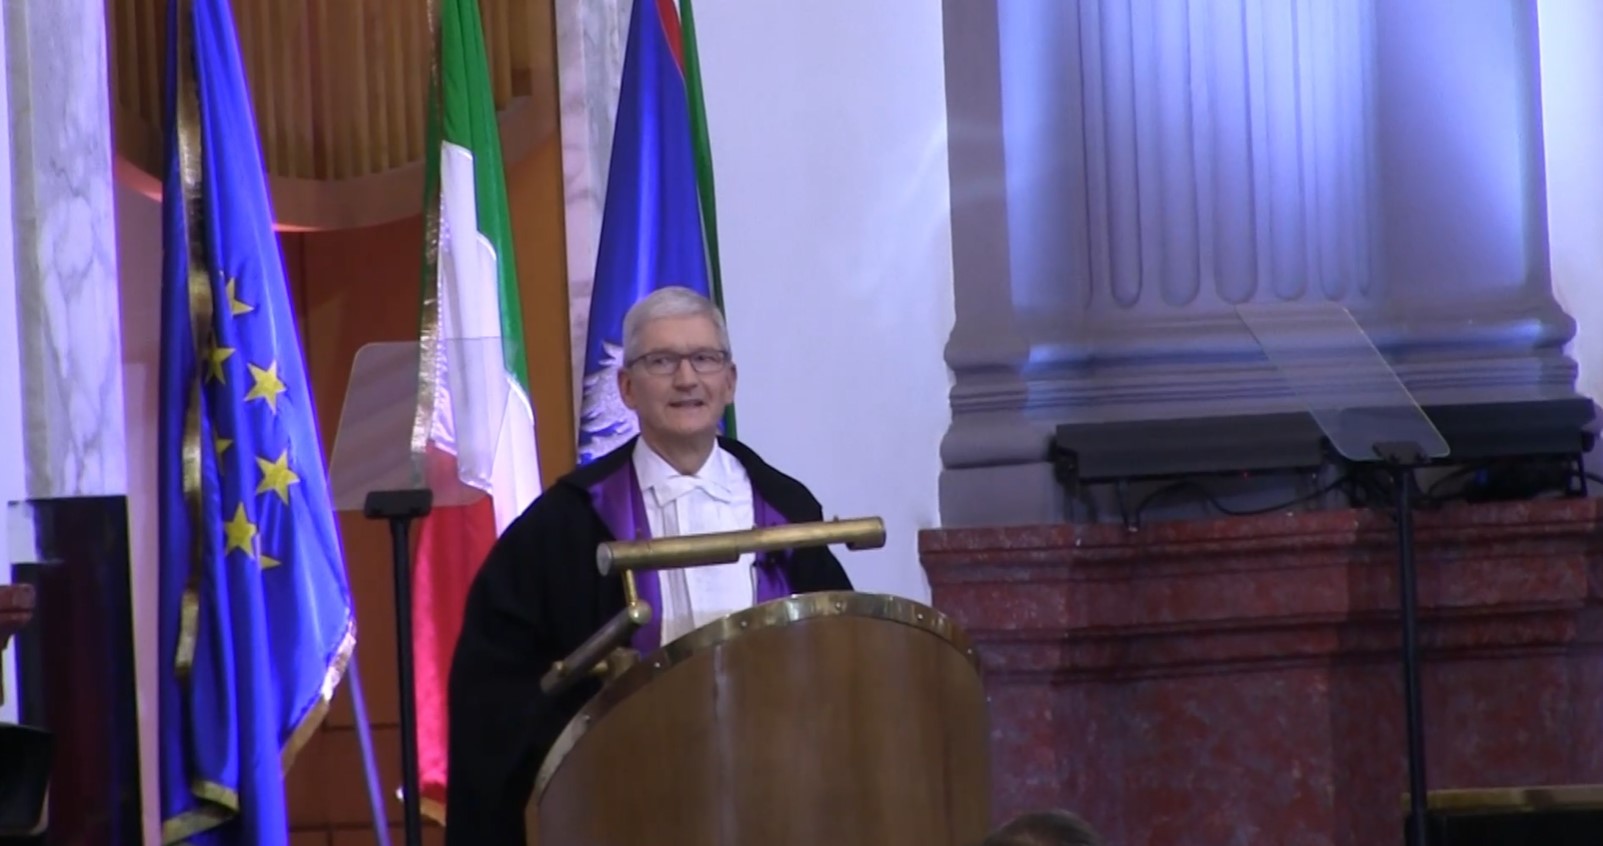 Napoli, Tim Cook riceve la laurea honoris causa all'Università Federico II - VIDEO